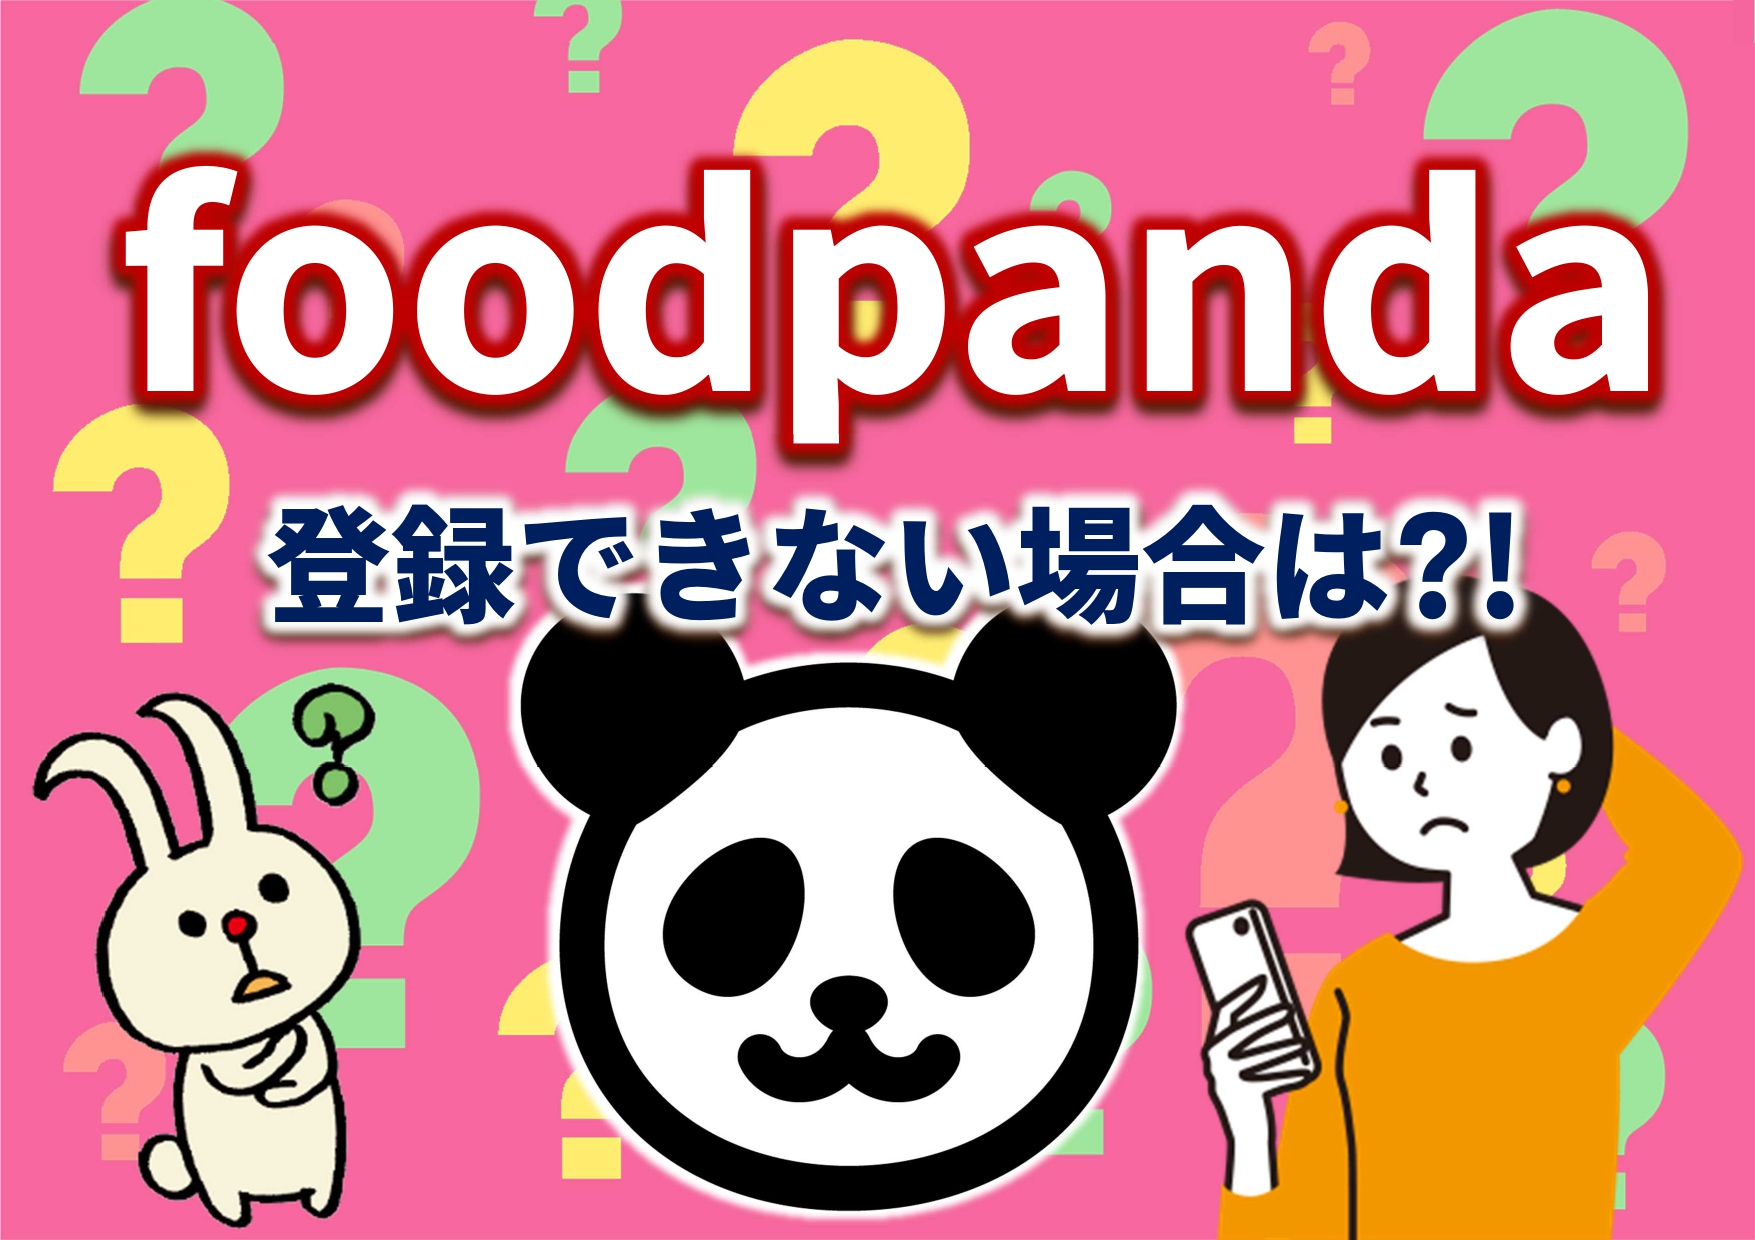 Food Pandaの登録ができない場合は 日刊ベリー通信